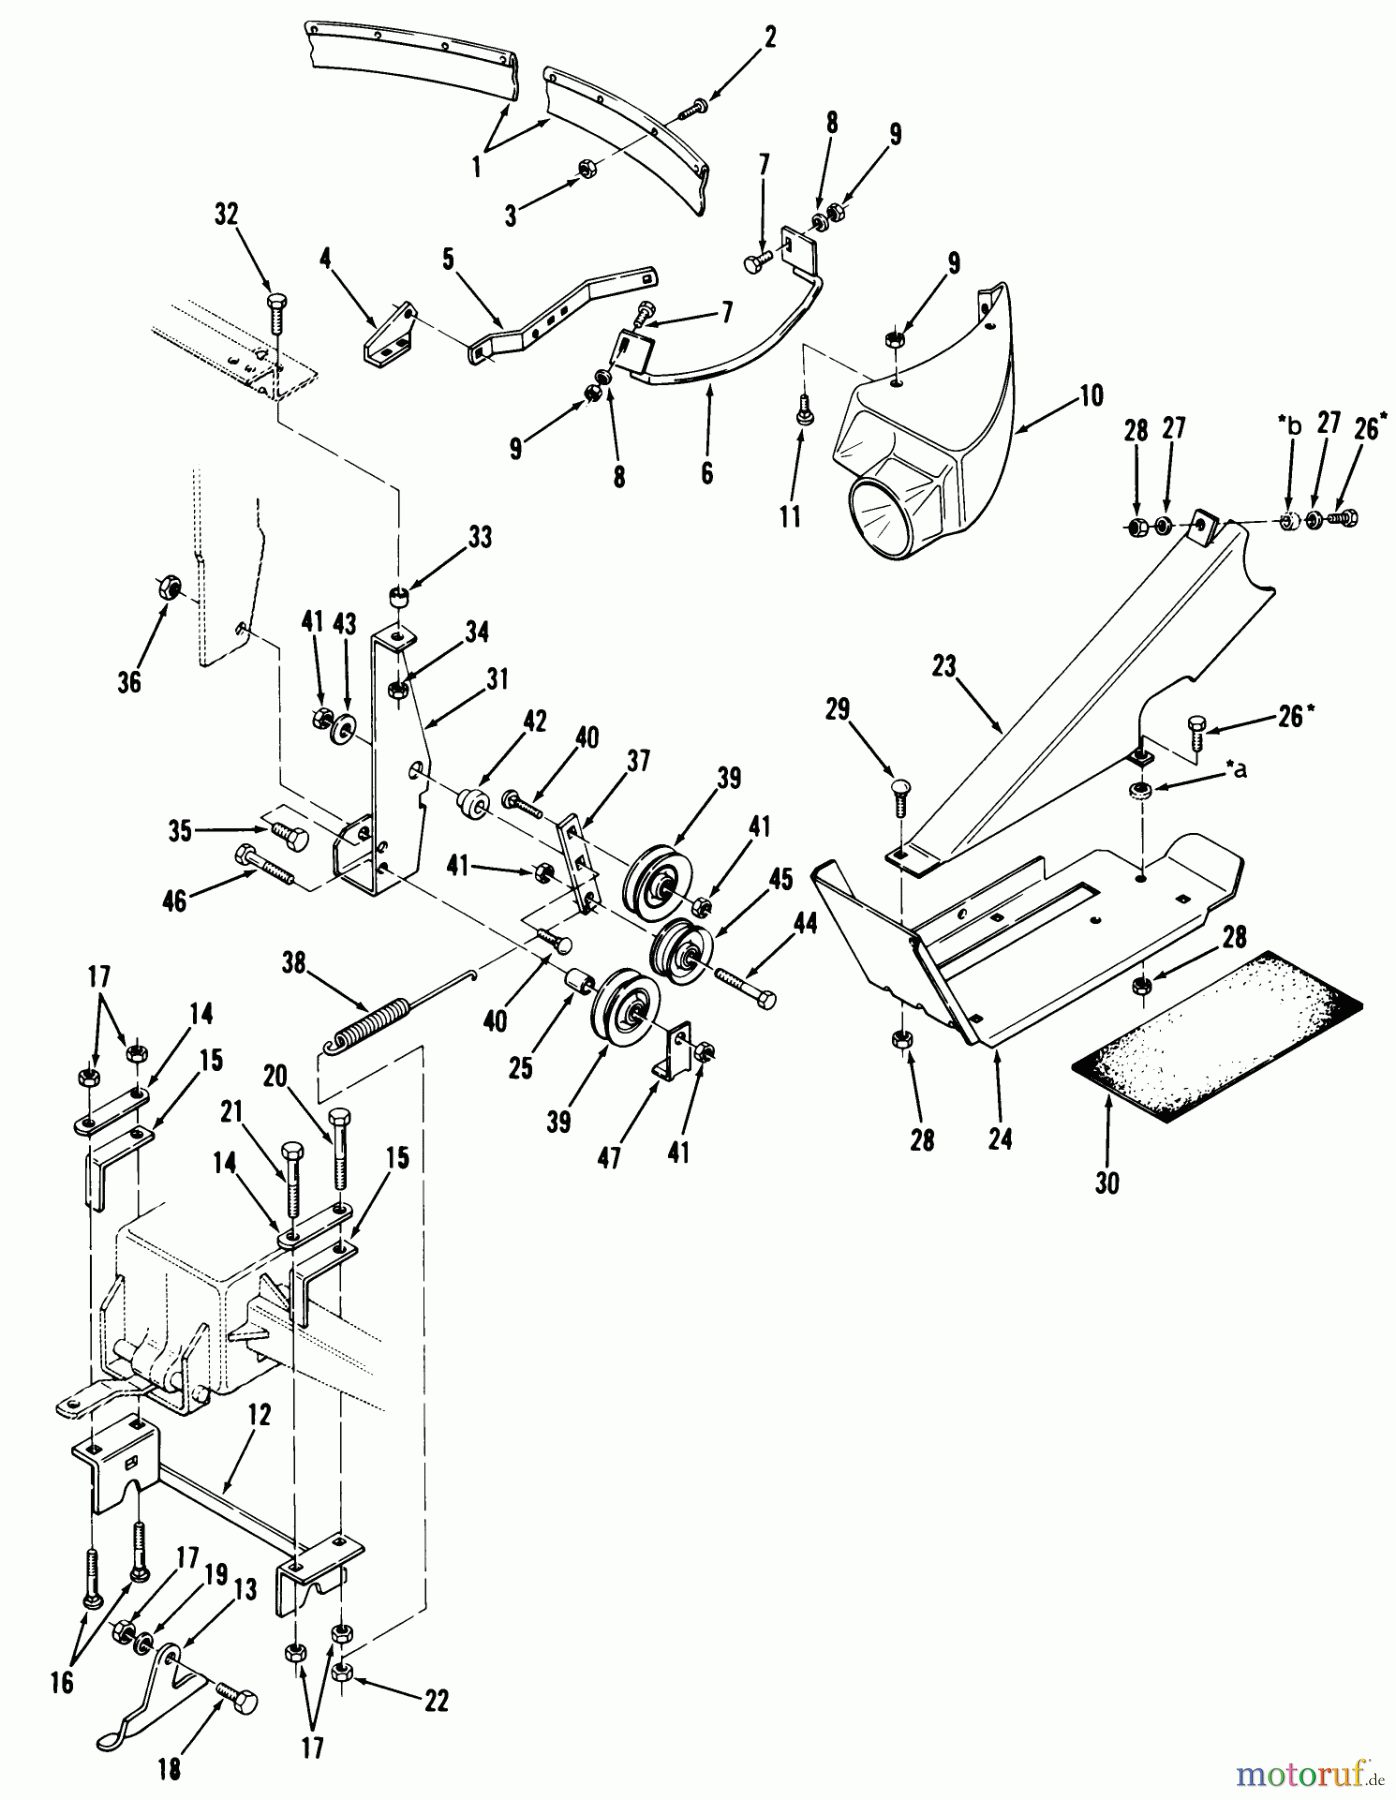  Toro Neu Accessories, Mower 97-06CL01 - Toro Rear Bagger, 1979 LAWN VACUUMS (VEHICLE IDENTIFICATION NUMBERS 97-42VC01 & 97-42VC02) #2